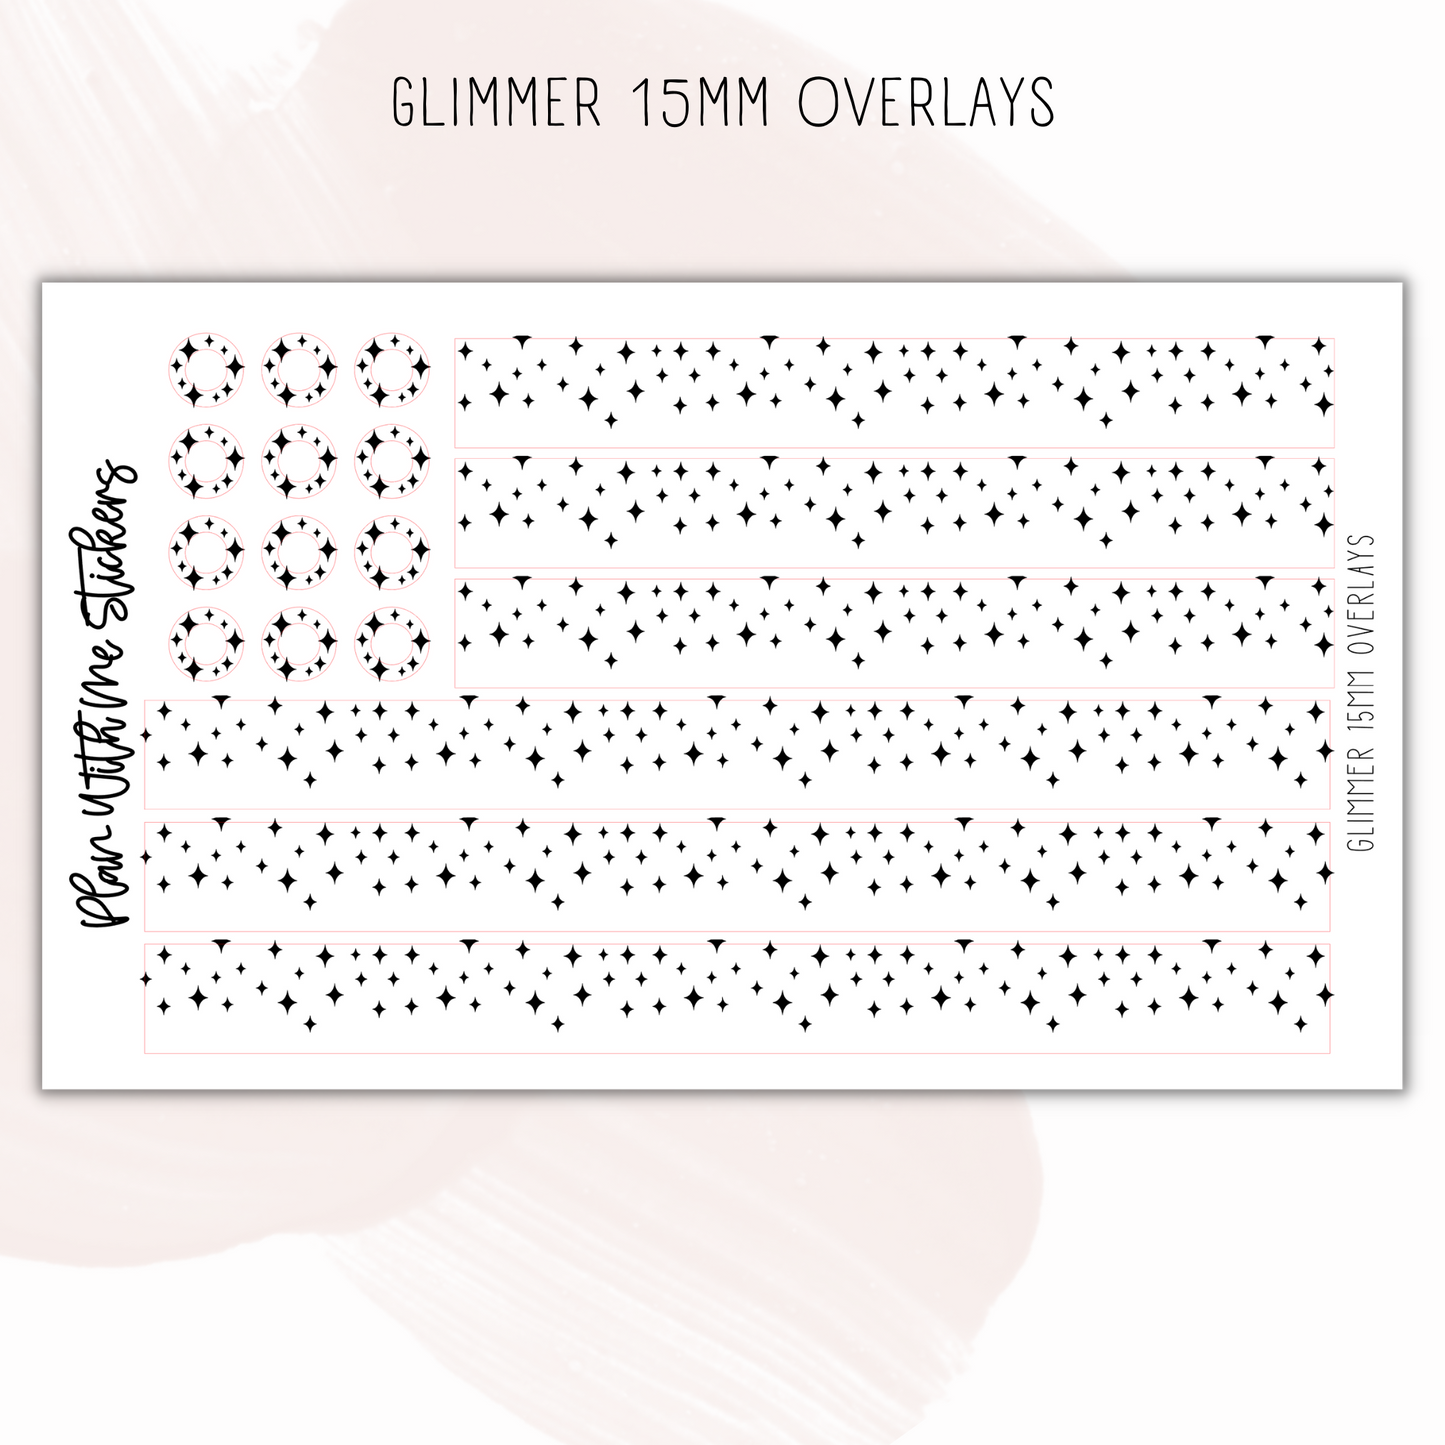 Glimmer 15MM Overlays